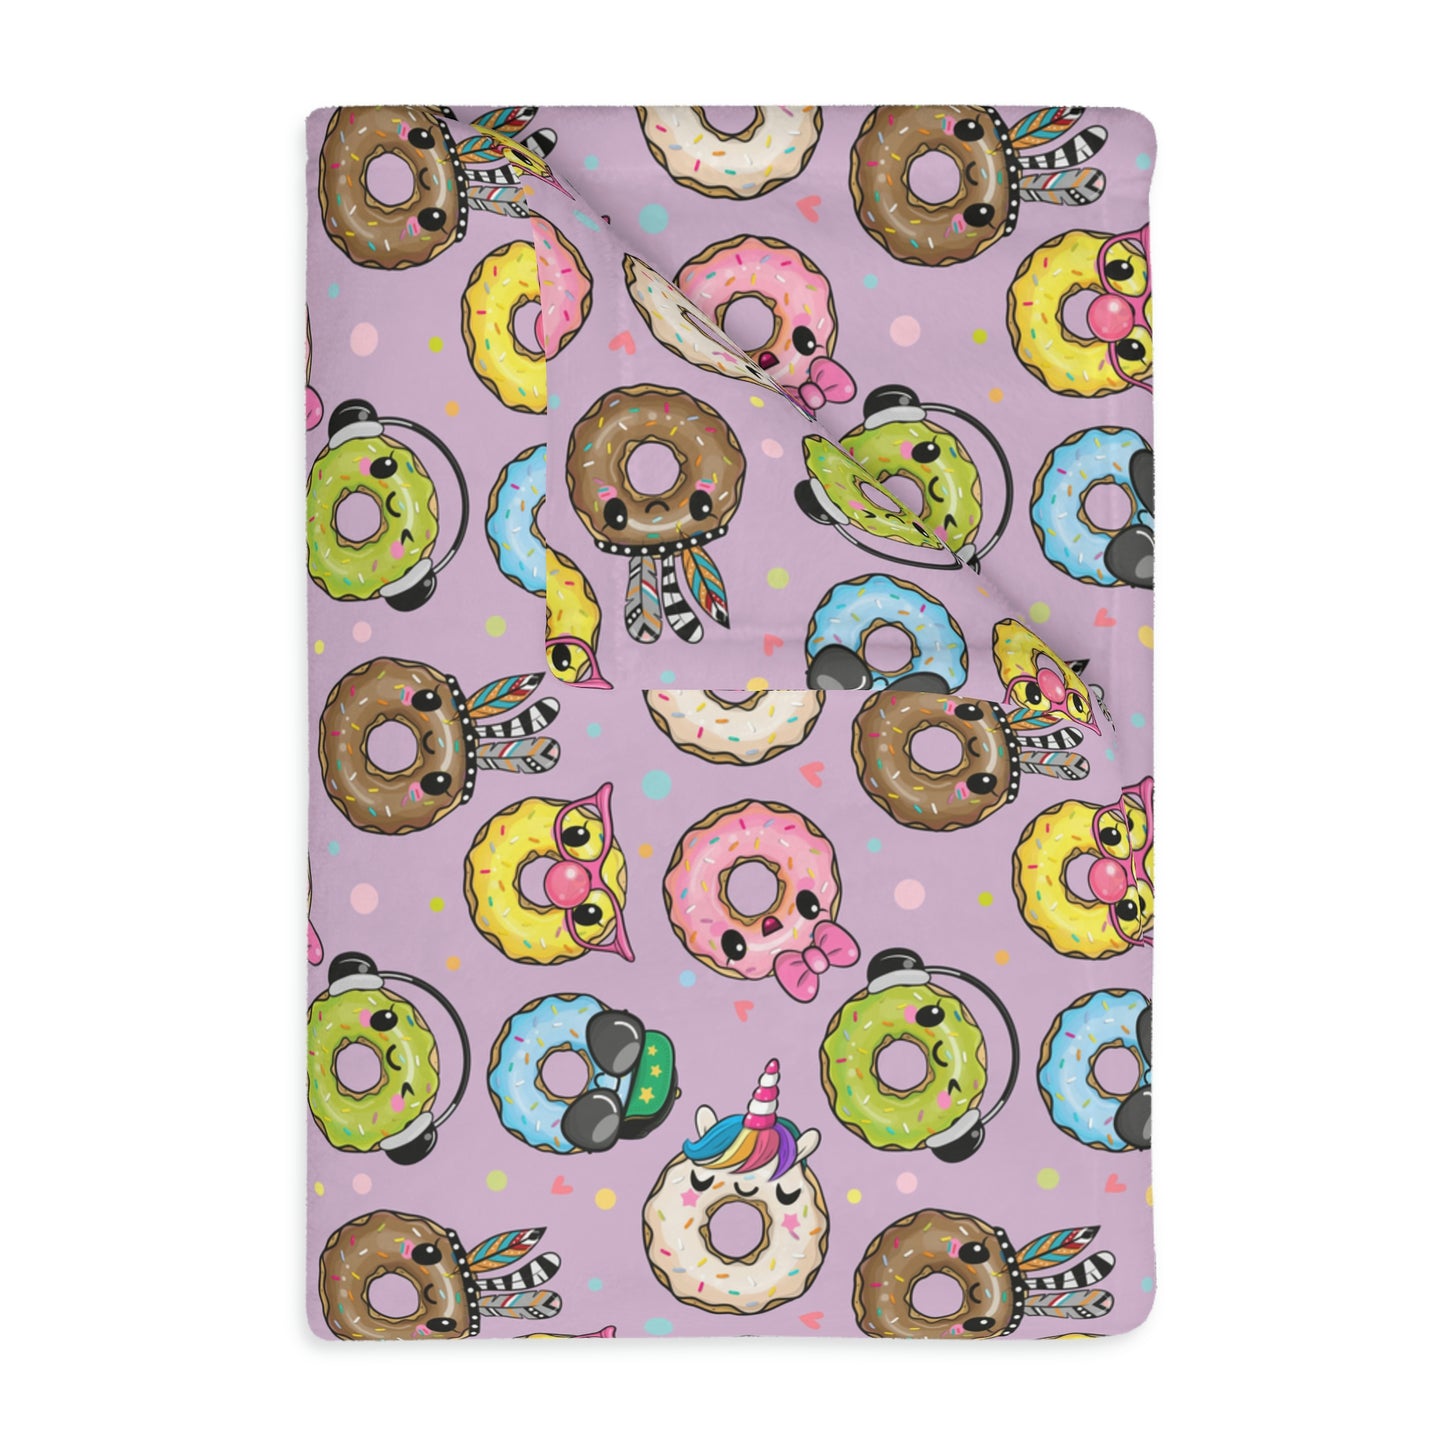 Kawaii Donuts Velveteen Minky Blanket (Two-sided print)